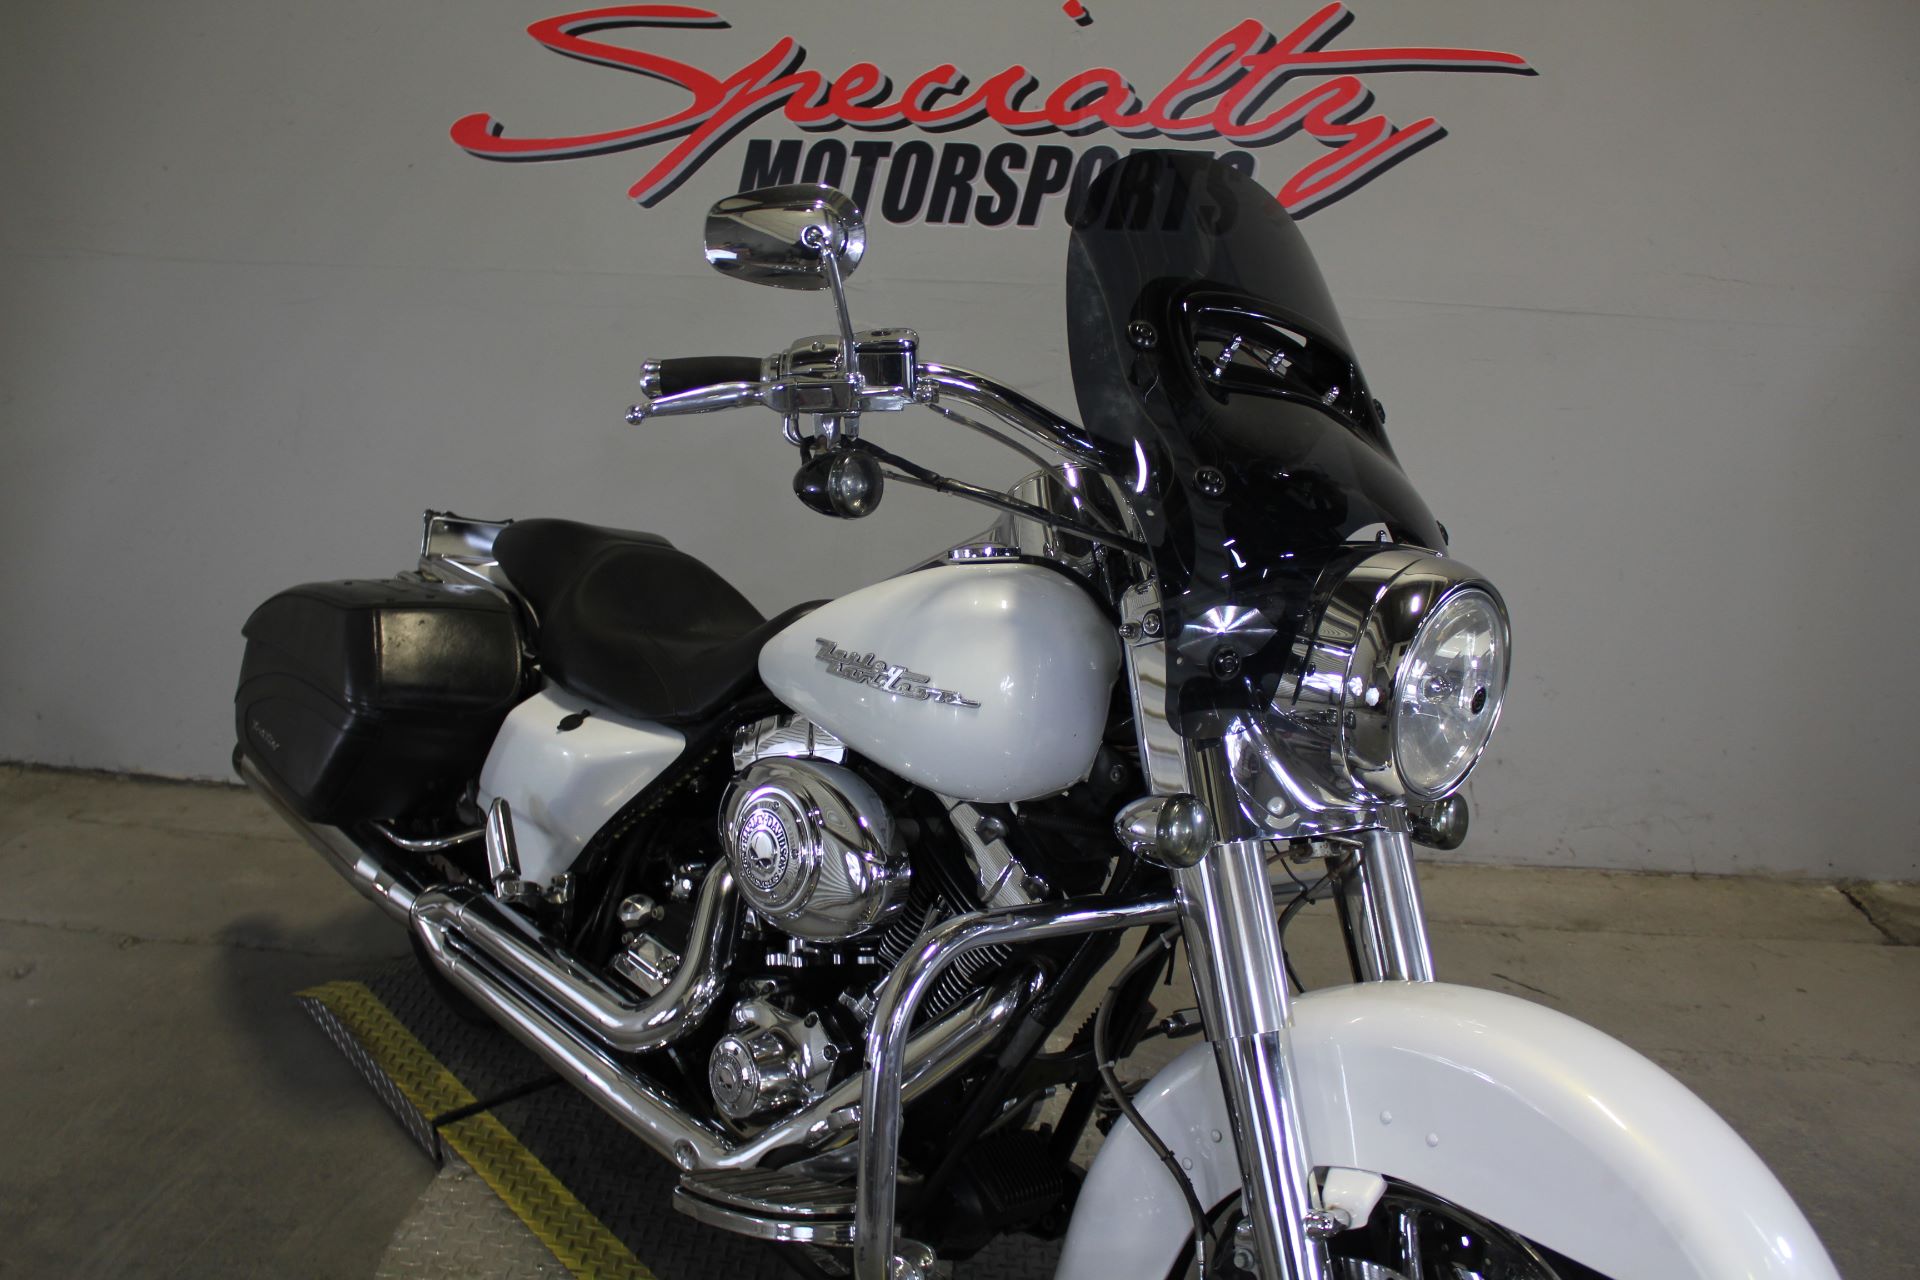 2007 Harley-Davidson Road King® Custom in Sacramento, California - Photo 10